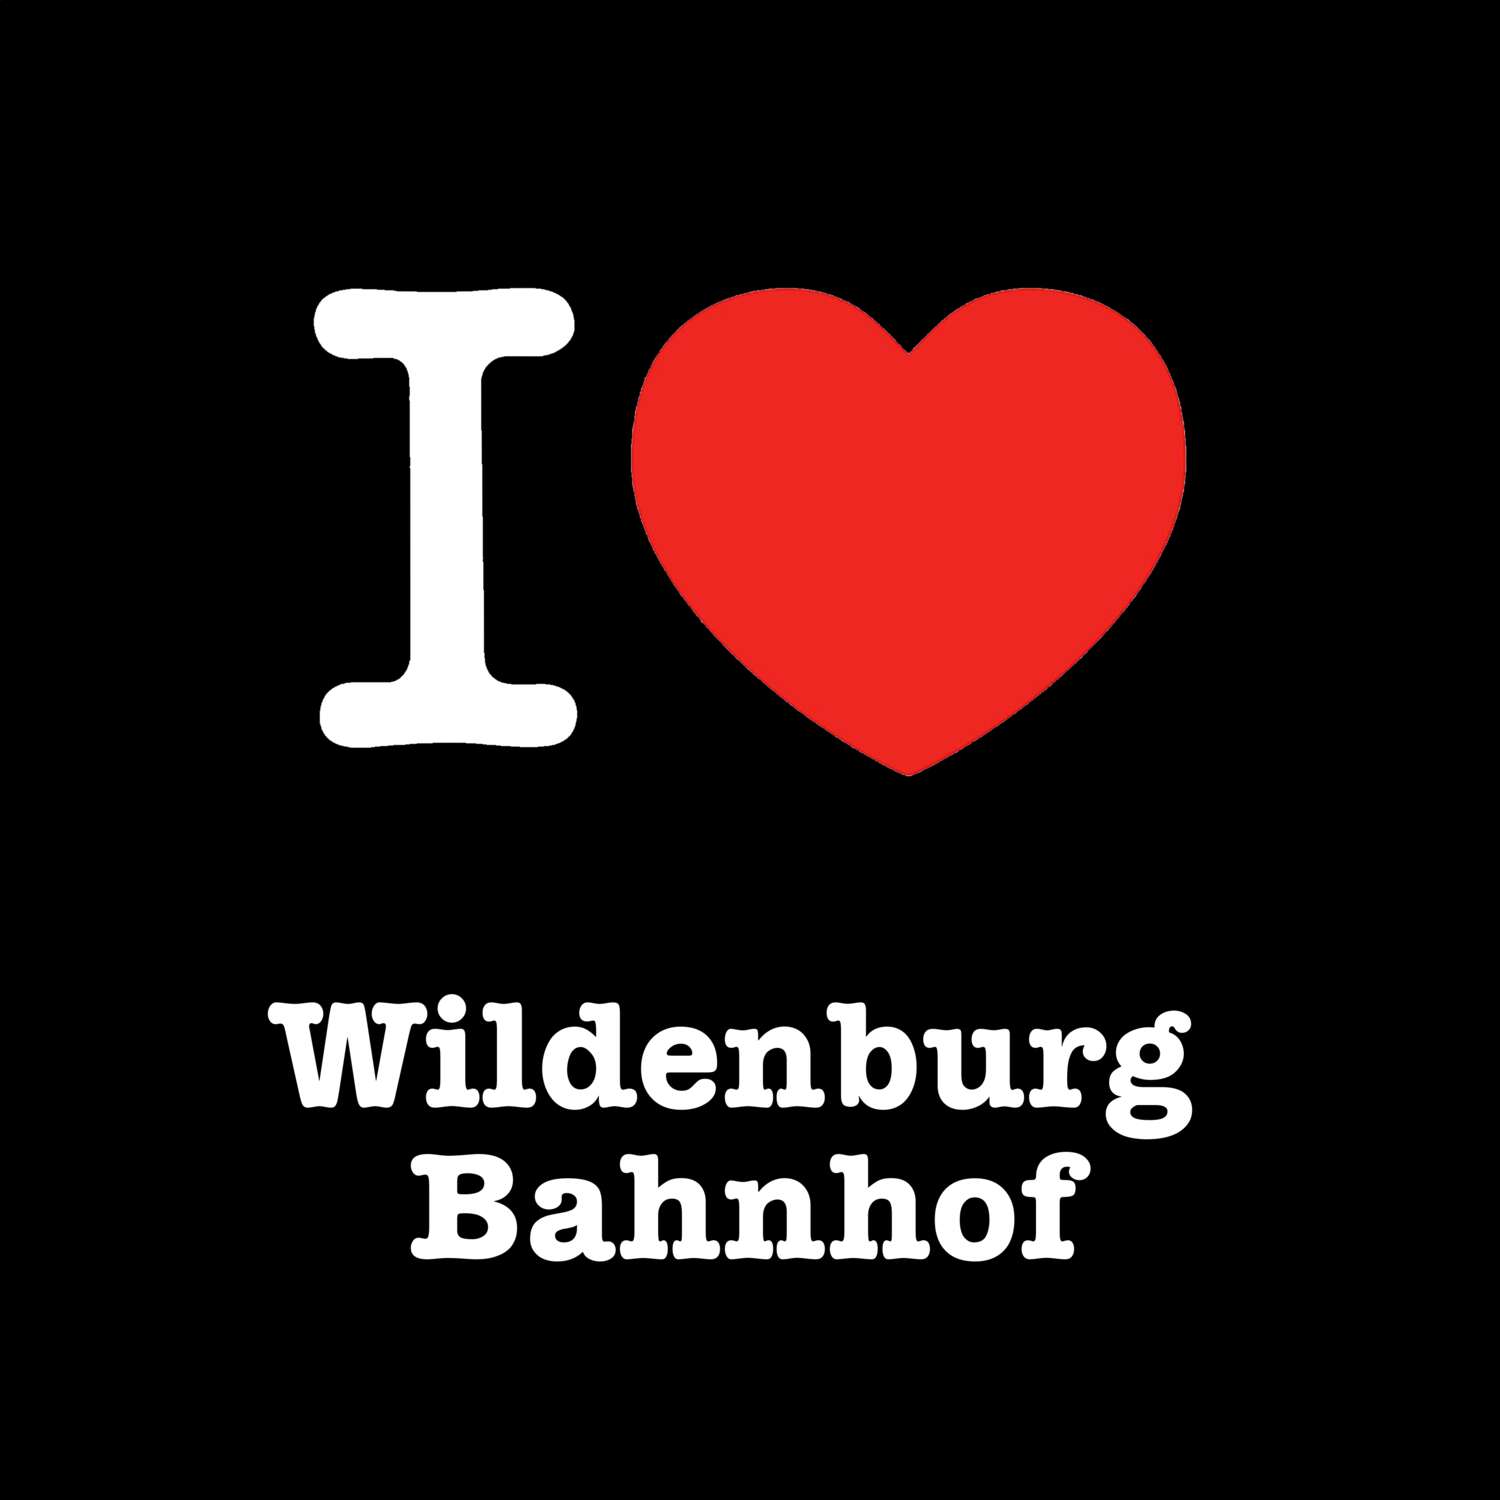 Wildenburg Bahnhof T-Shirt »I love«